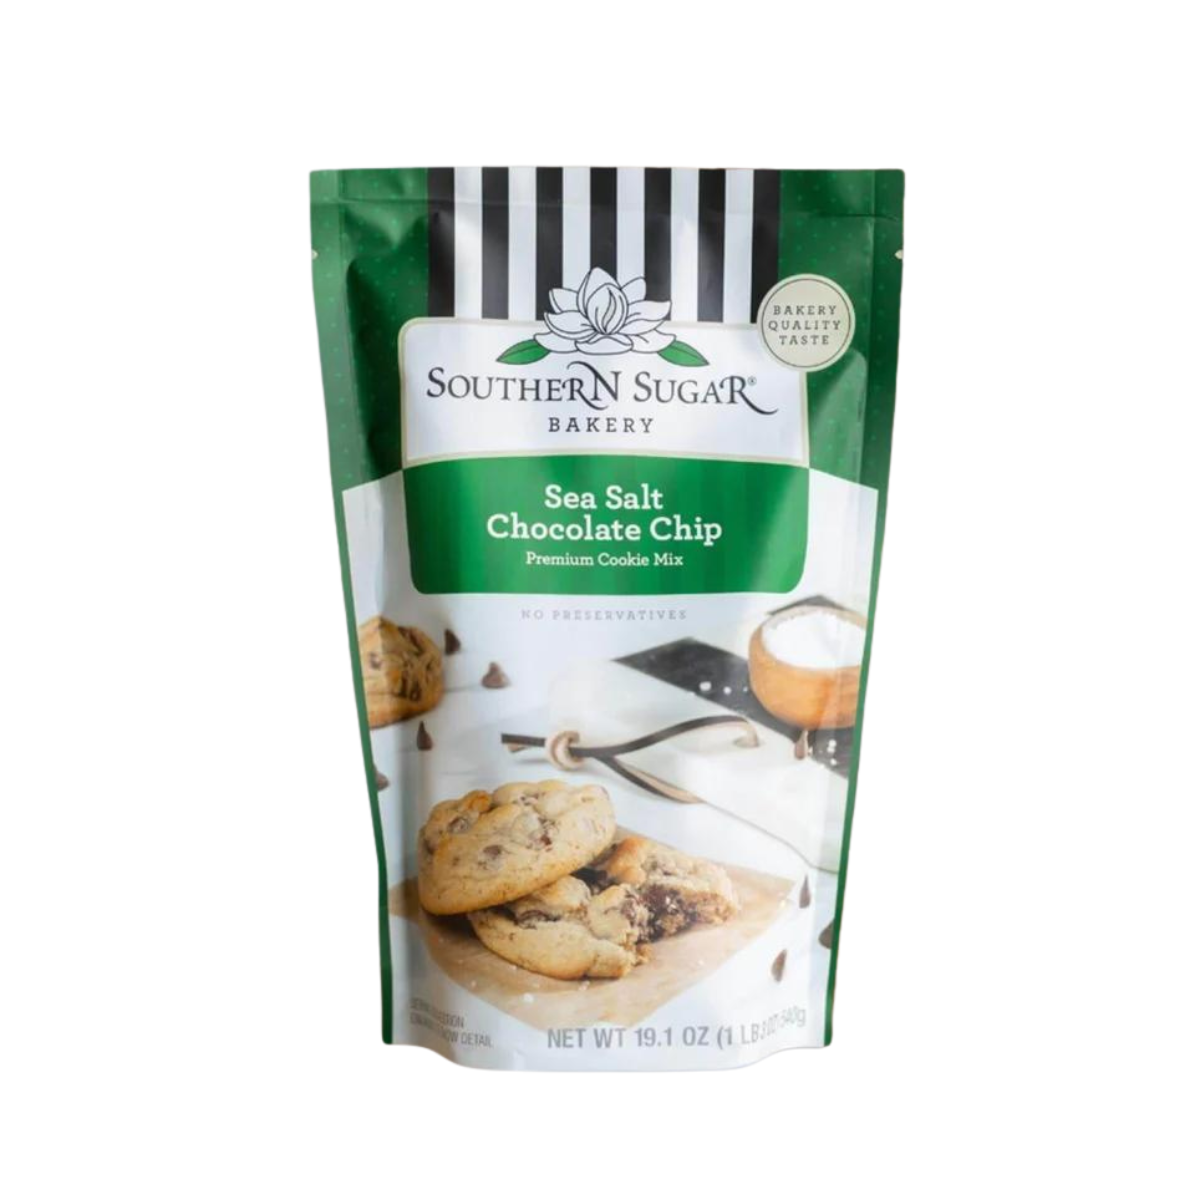 Sea Salt Chocolate Chip Premium Cookie Mix